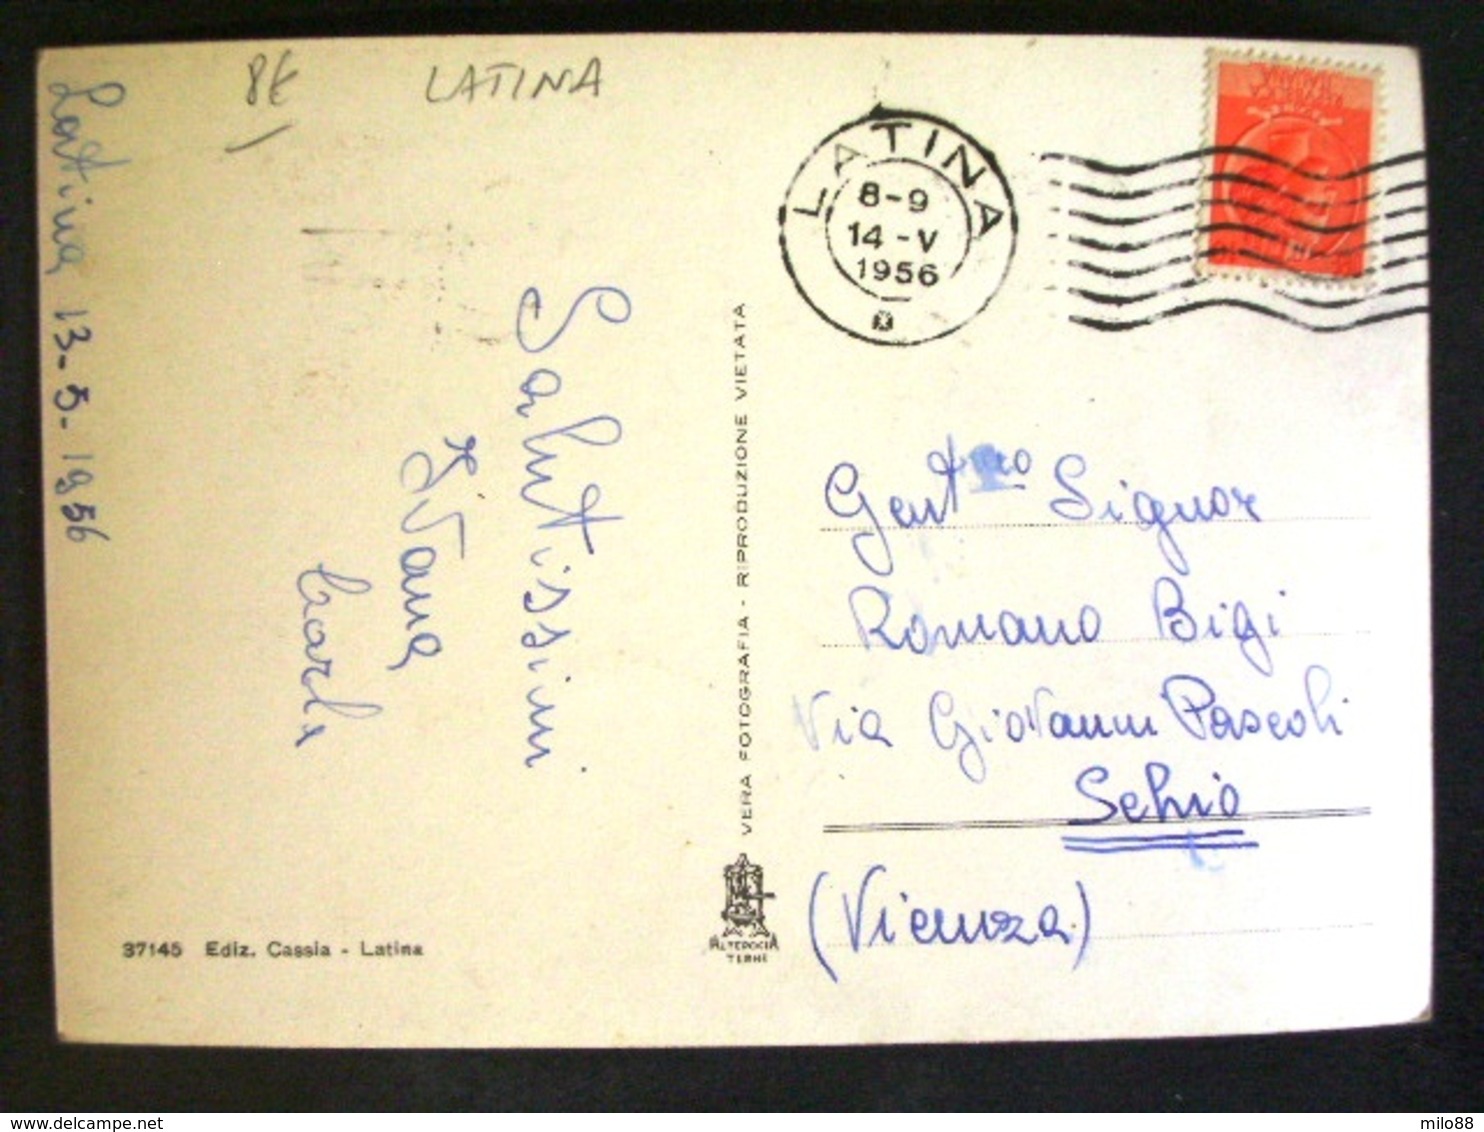 LAZIO -LATINA -F.G. LOTTO N°154 - Latina